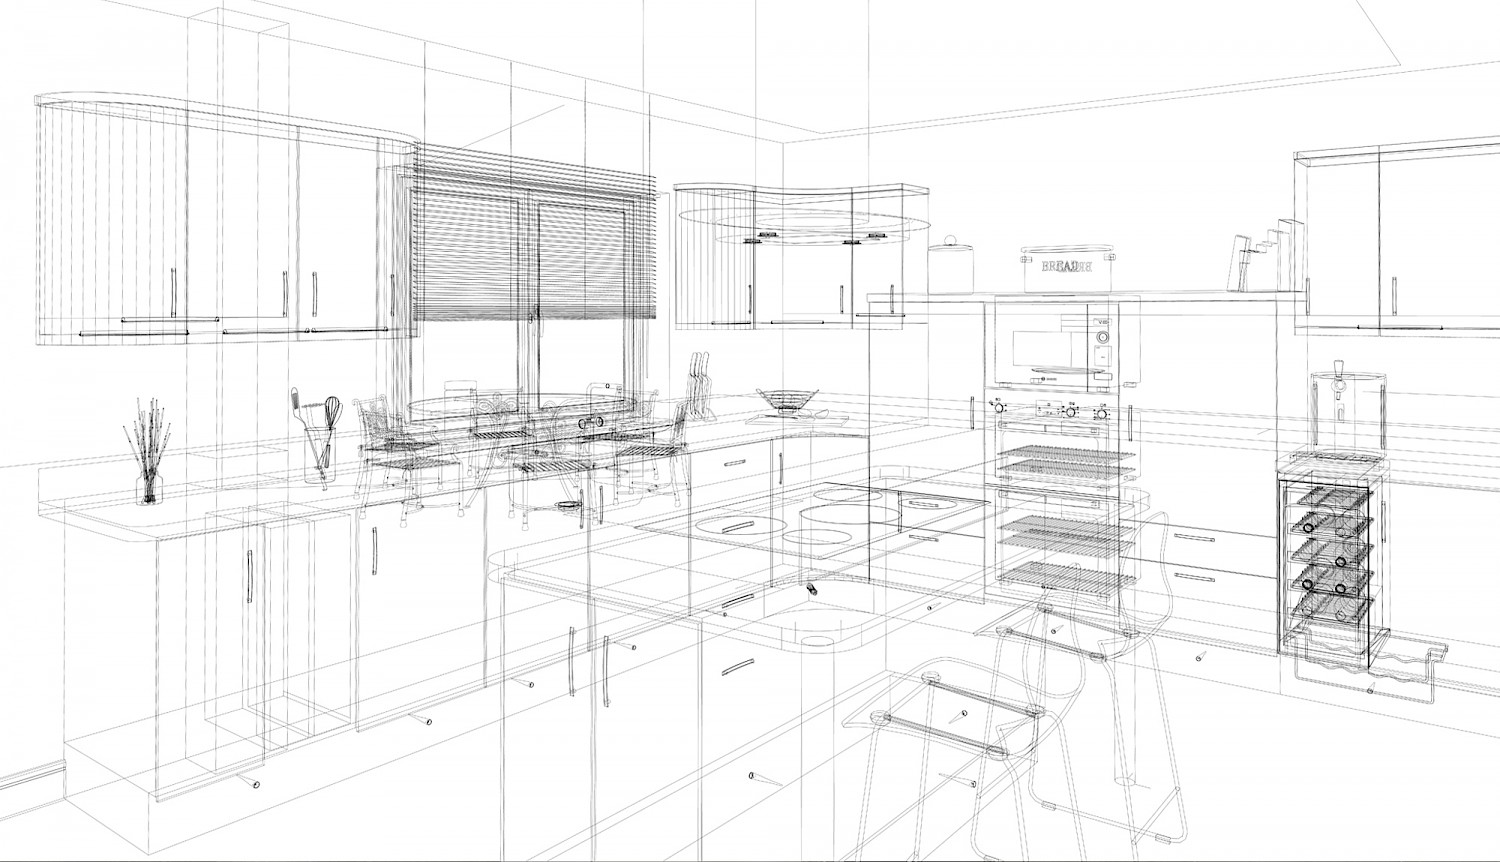 Skeleton line drawing of Kitchen interior